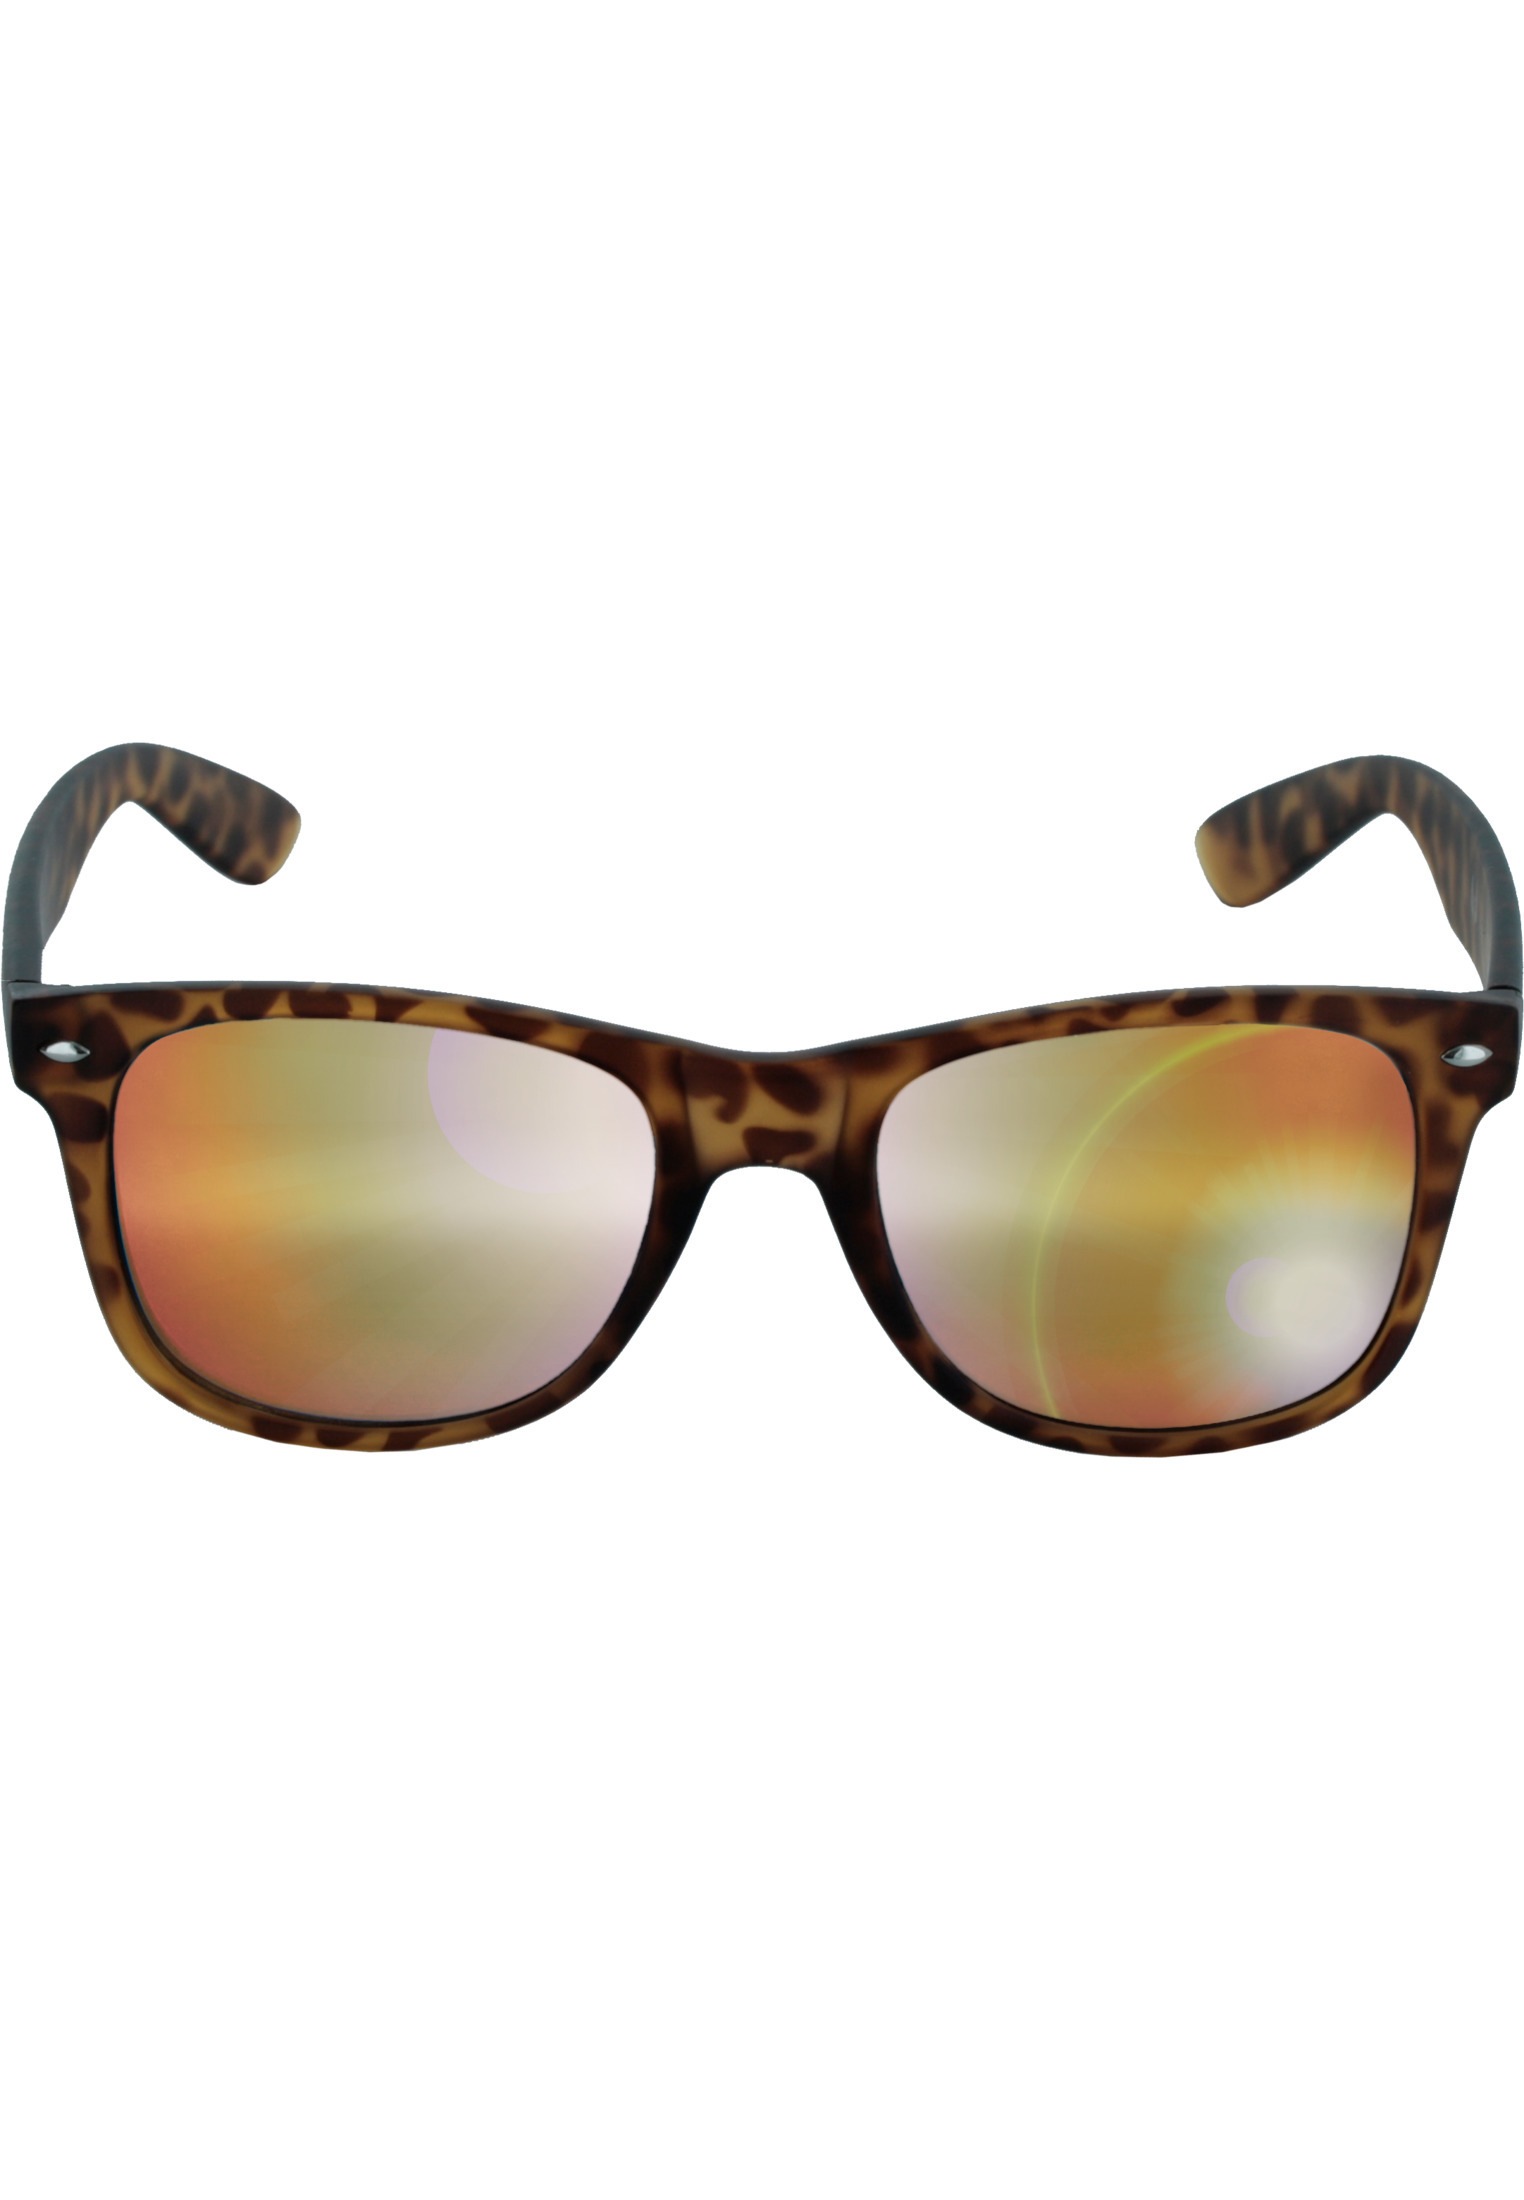 Sonnenbrille Mirror« BAUR MSTRDS Likoma online Sunglasses bestellen | »Accessoires